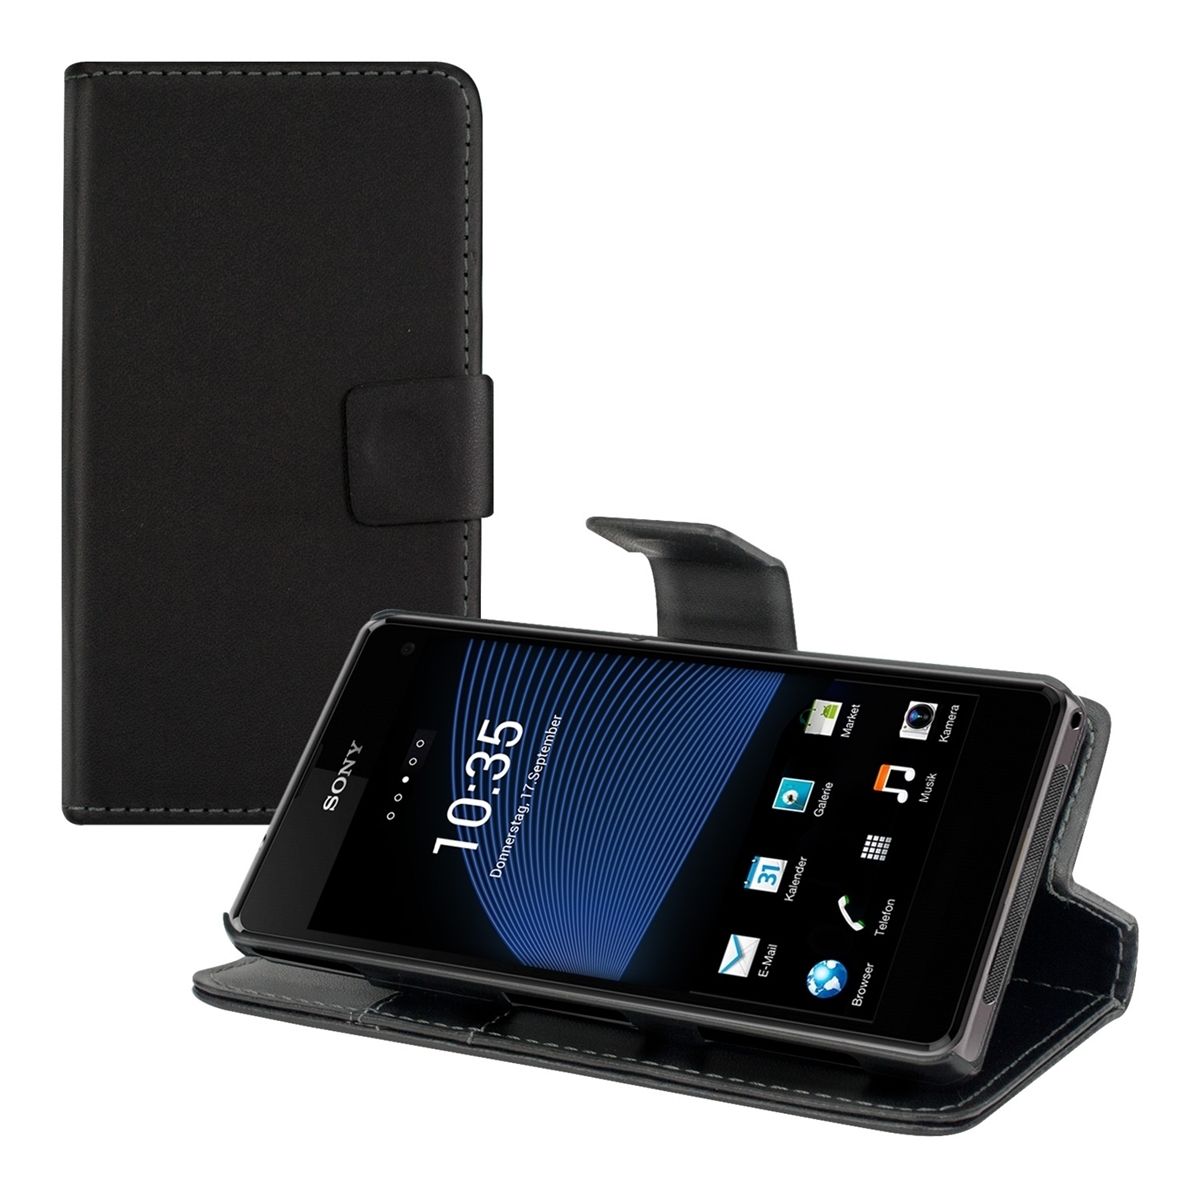 Pouzdro pro Sony Xperia Z1 Compact černé